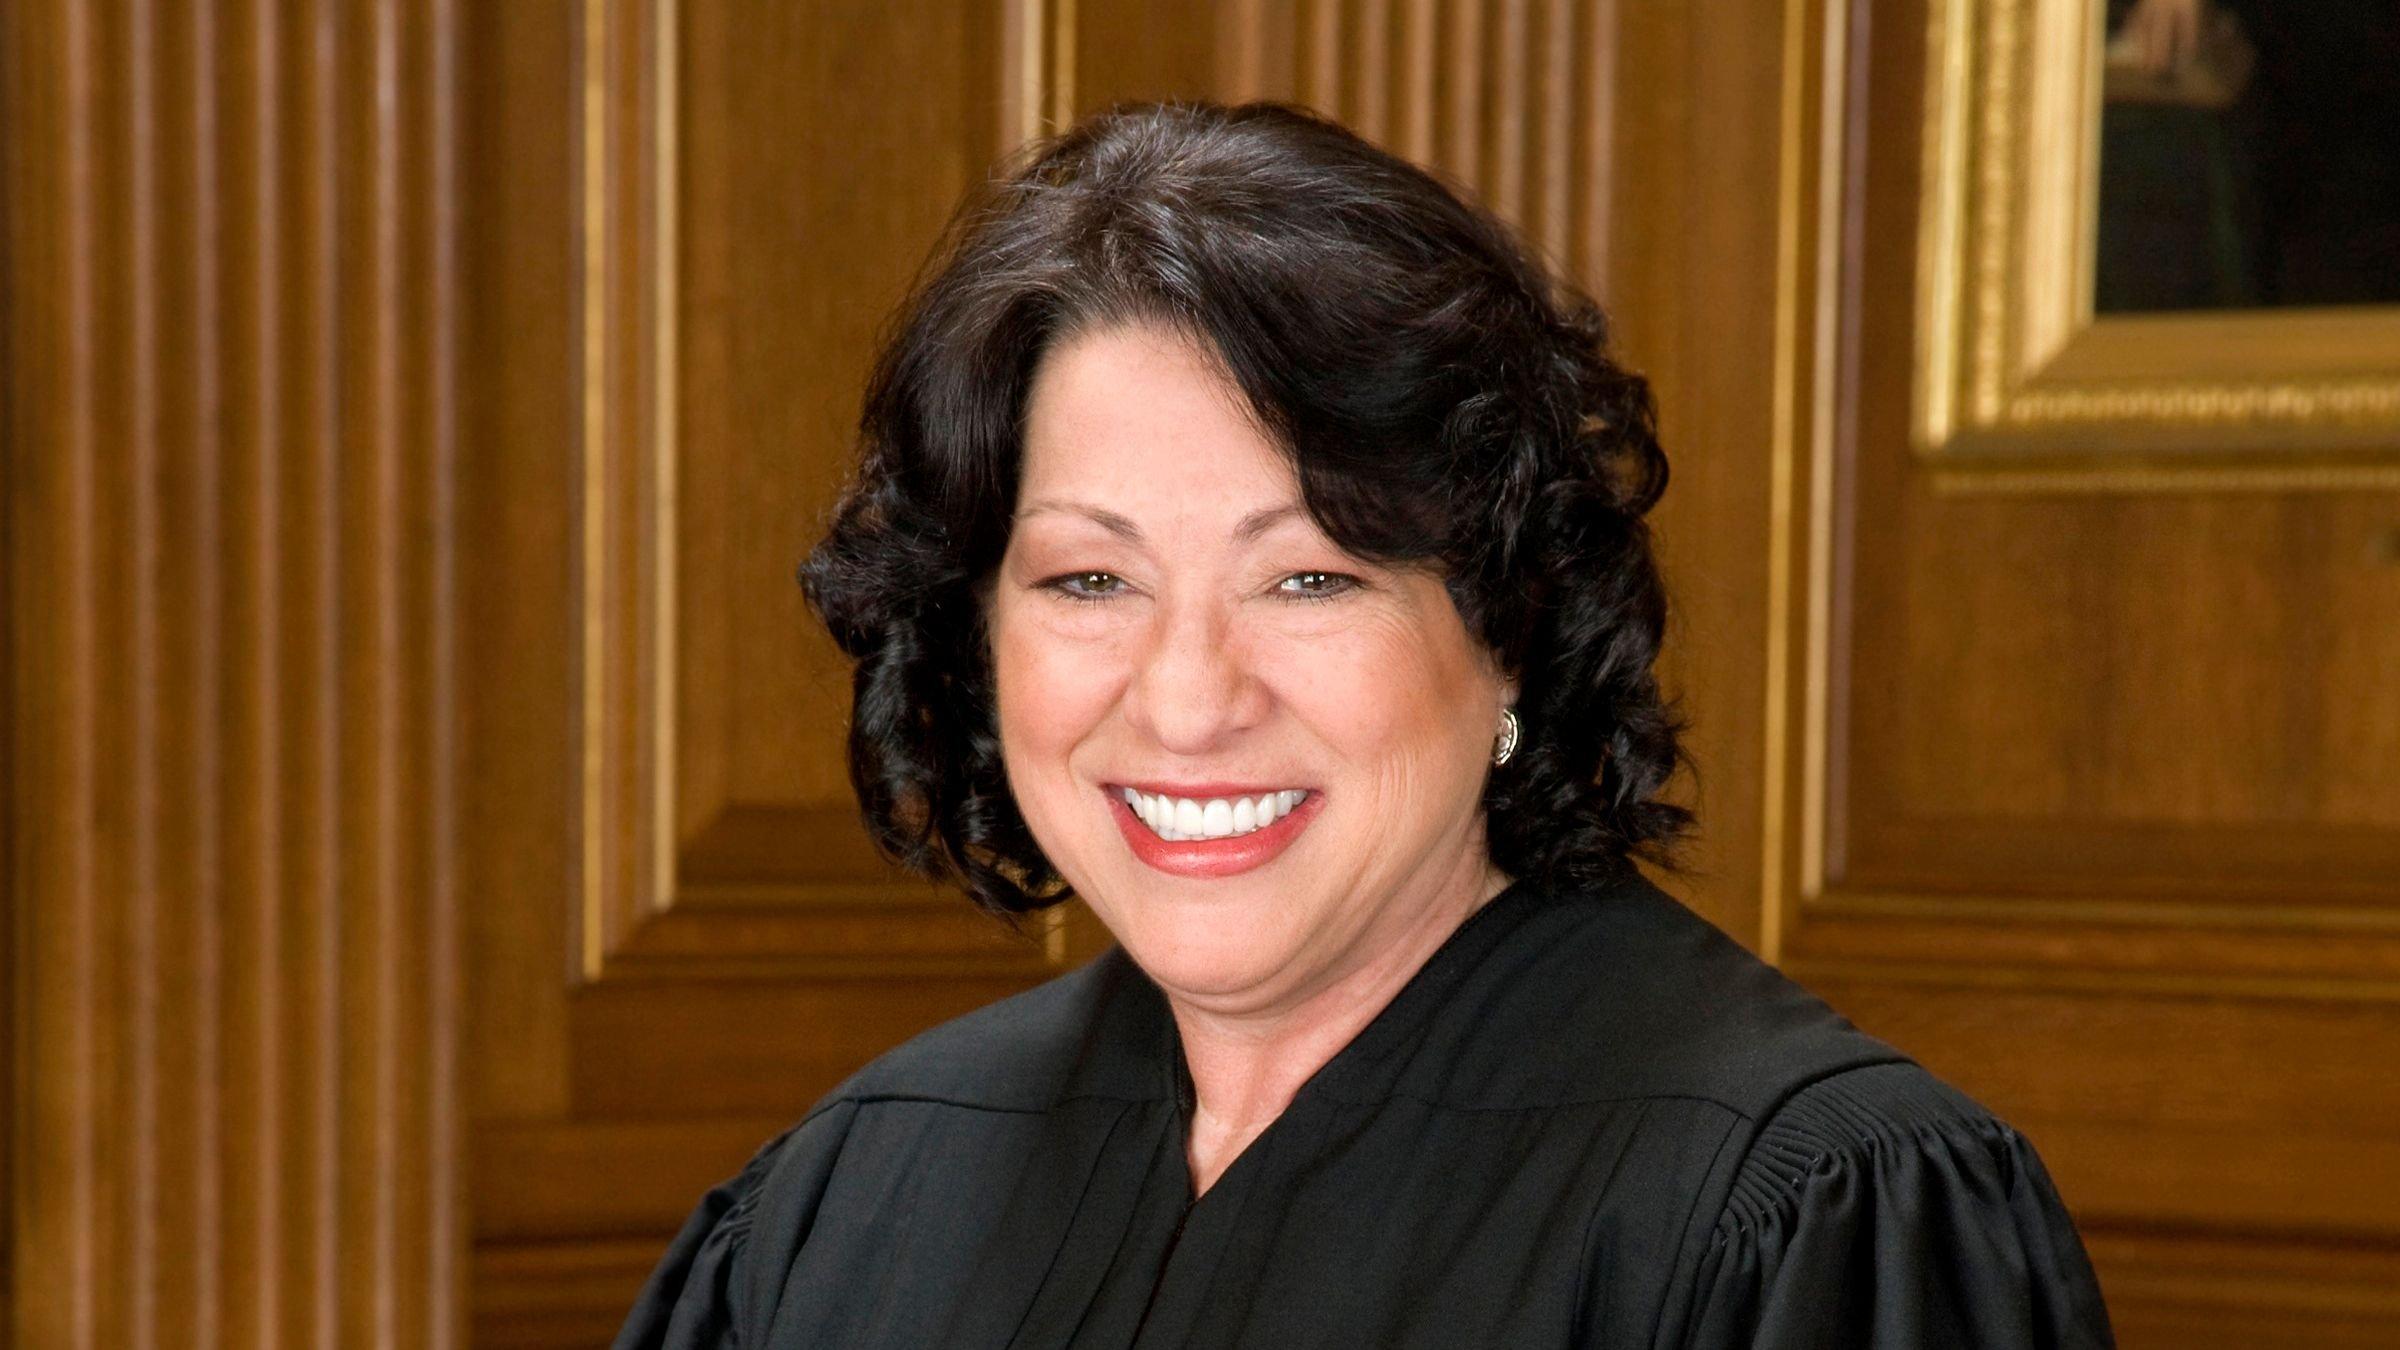 SCOTUS Justice Sonia Sotomayor looks on